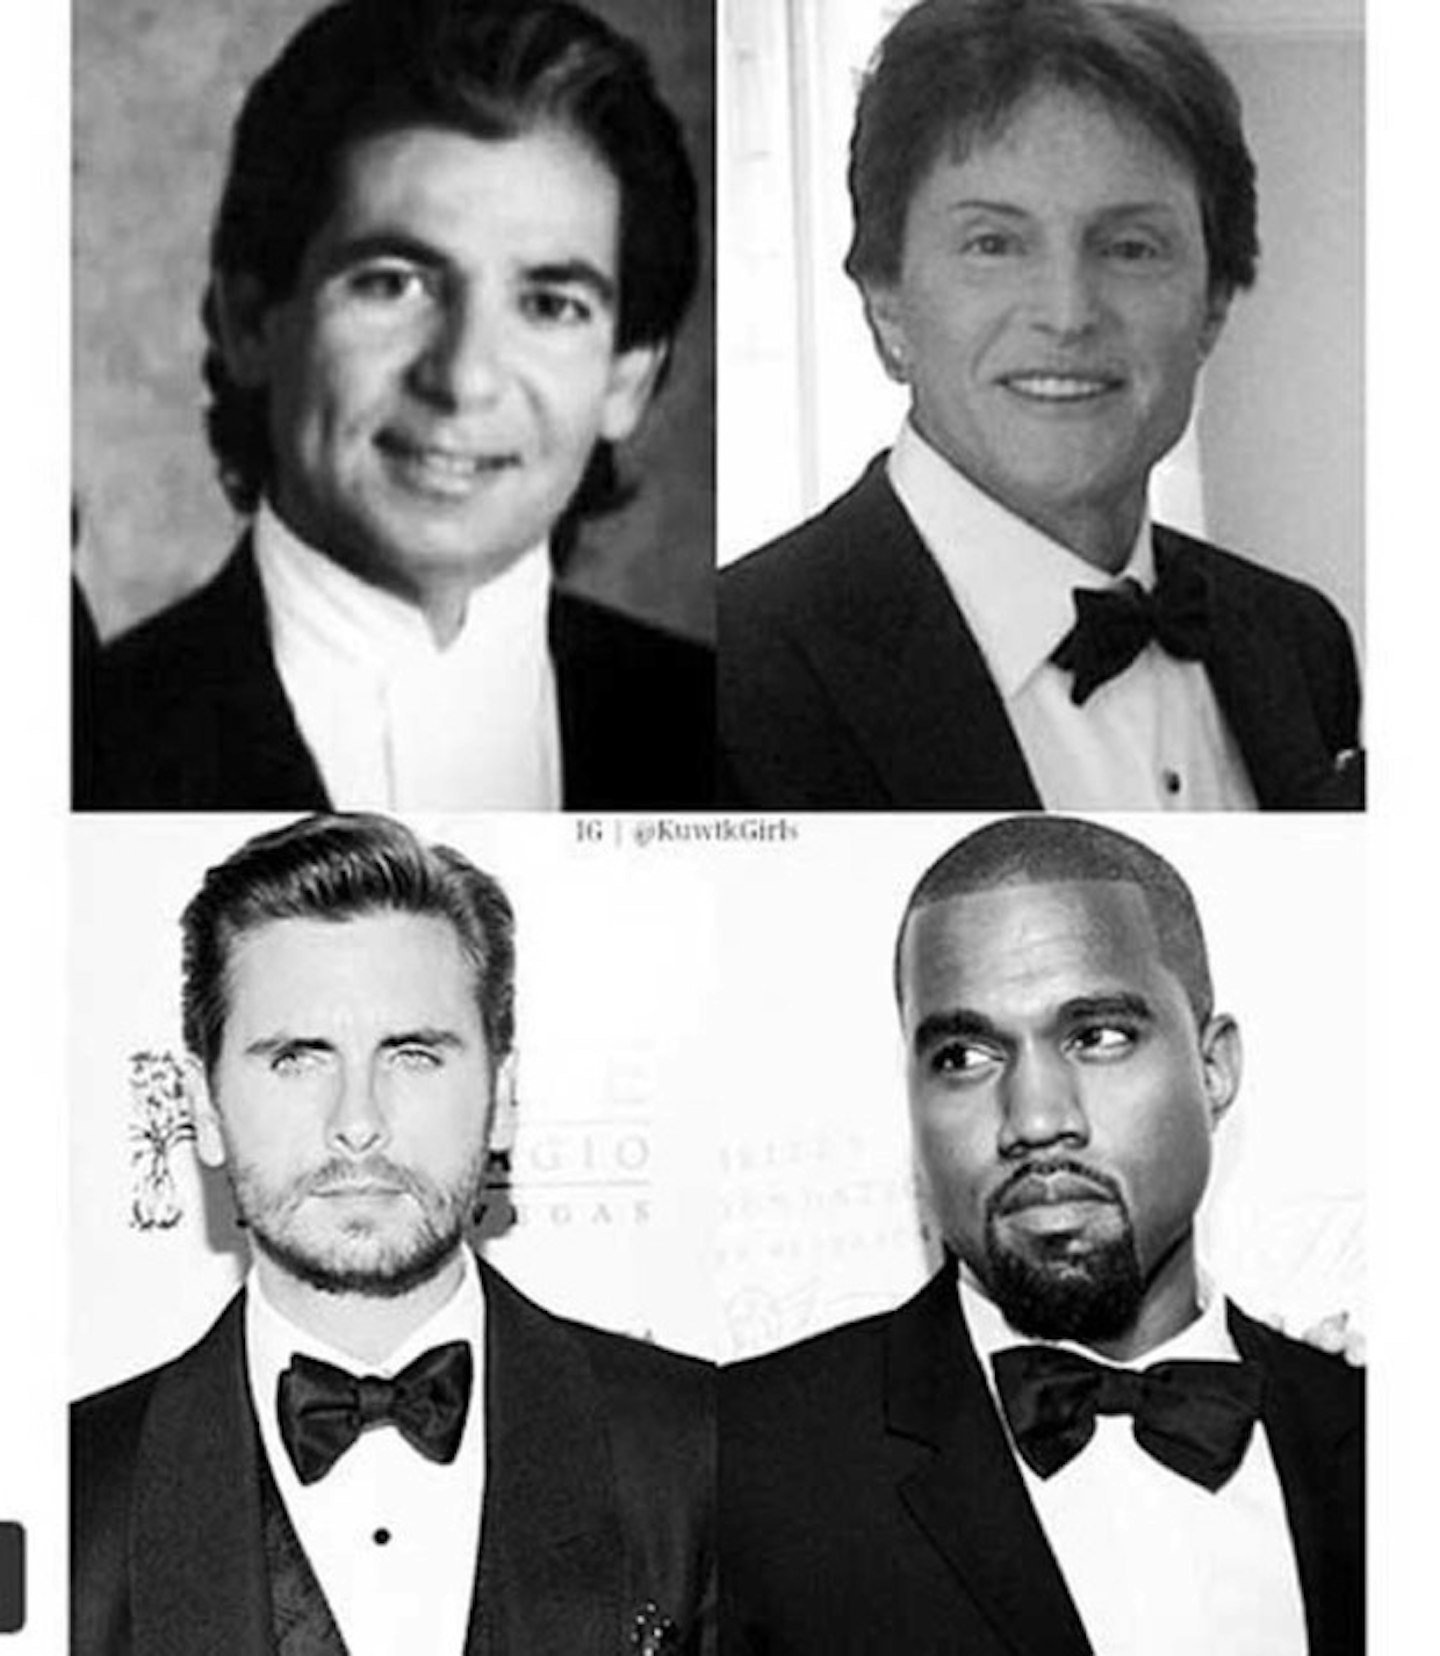 Robert Kardashian, Bruce Jenner, Scott Disick and Kanye West